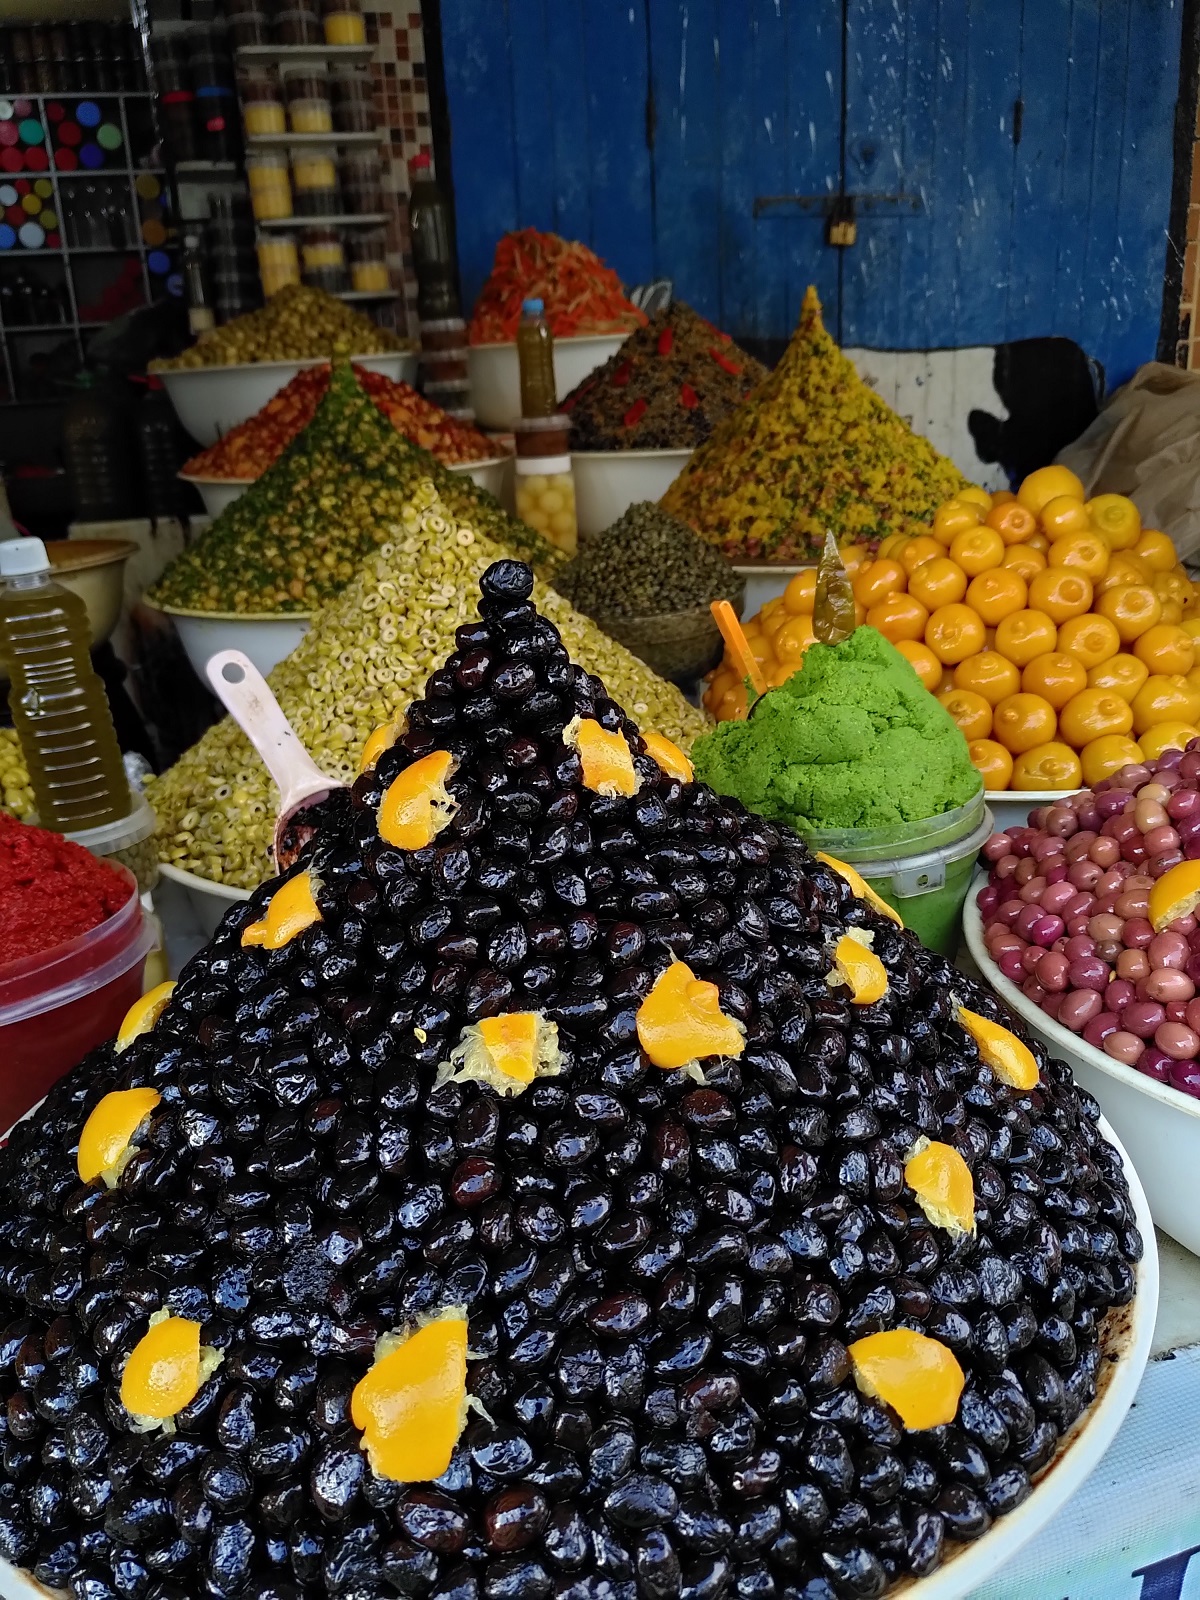 olives marché